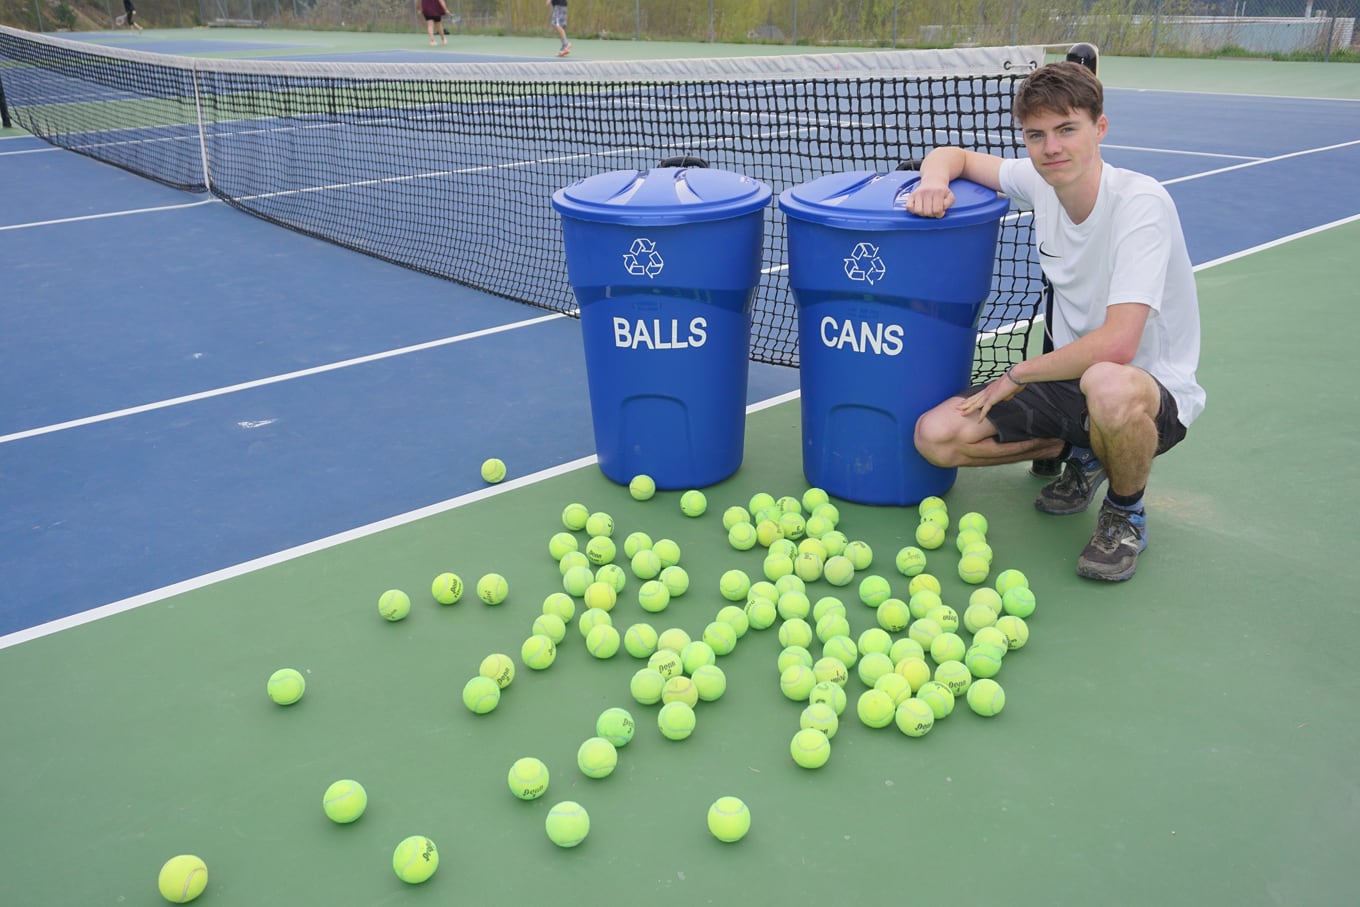 LVR student starts kick-starts recycling initiative for tennis balls